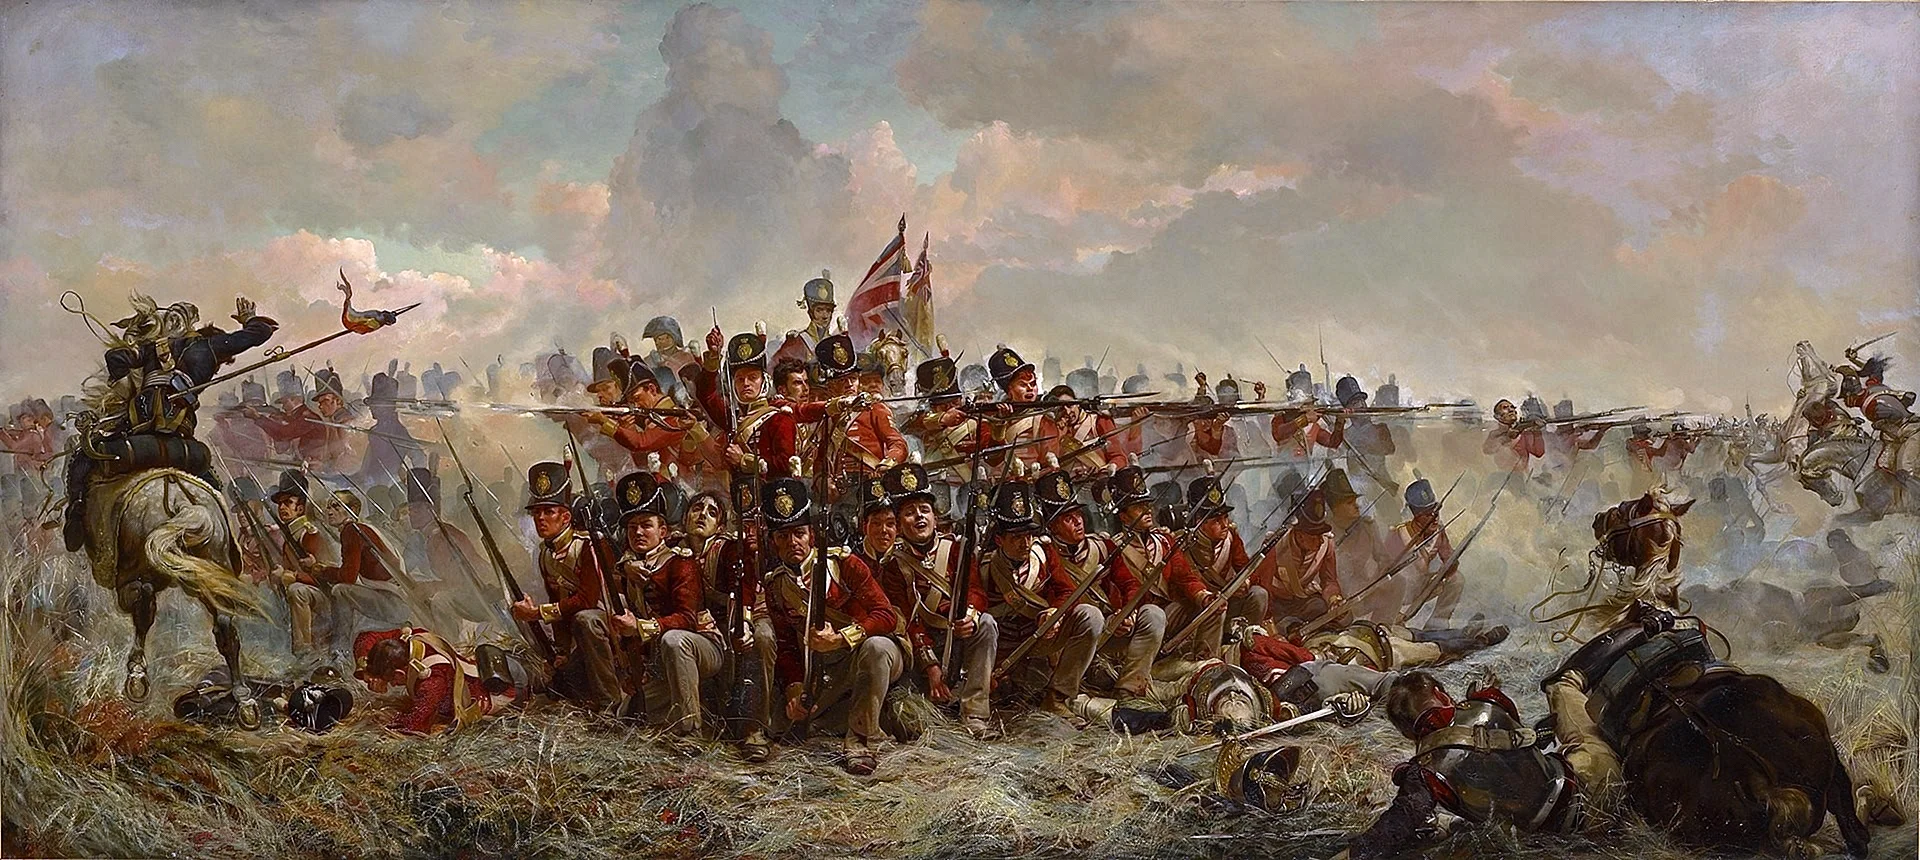 The Battle Of Waterloo 1815 Wallpaper